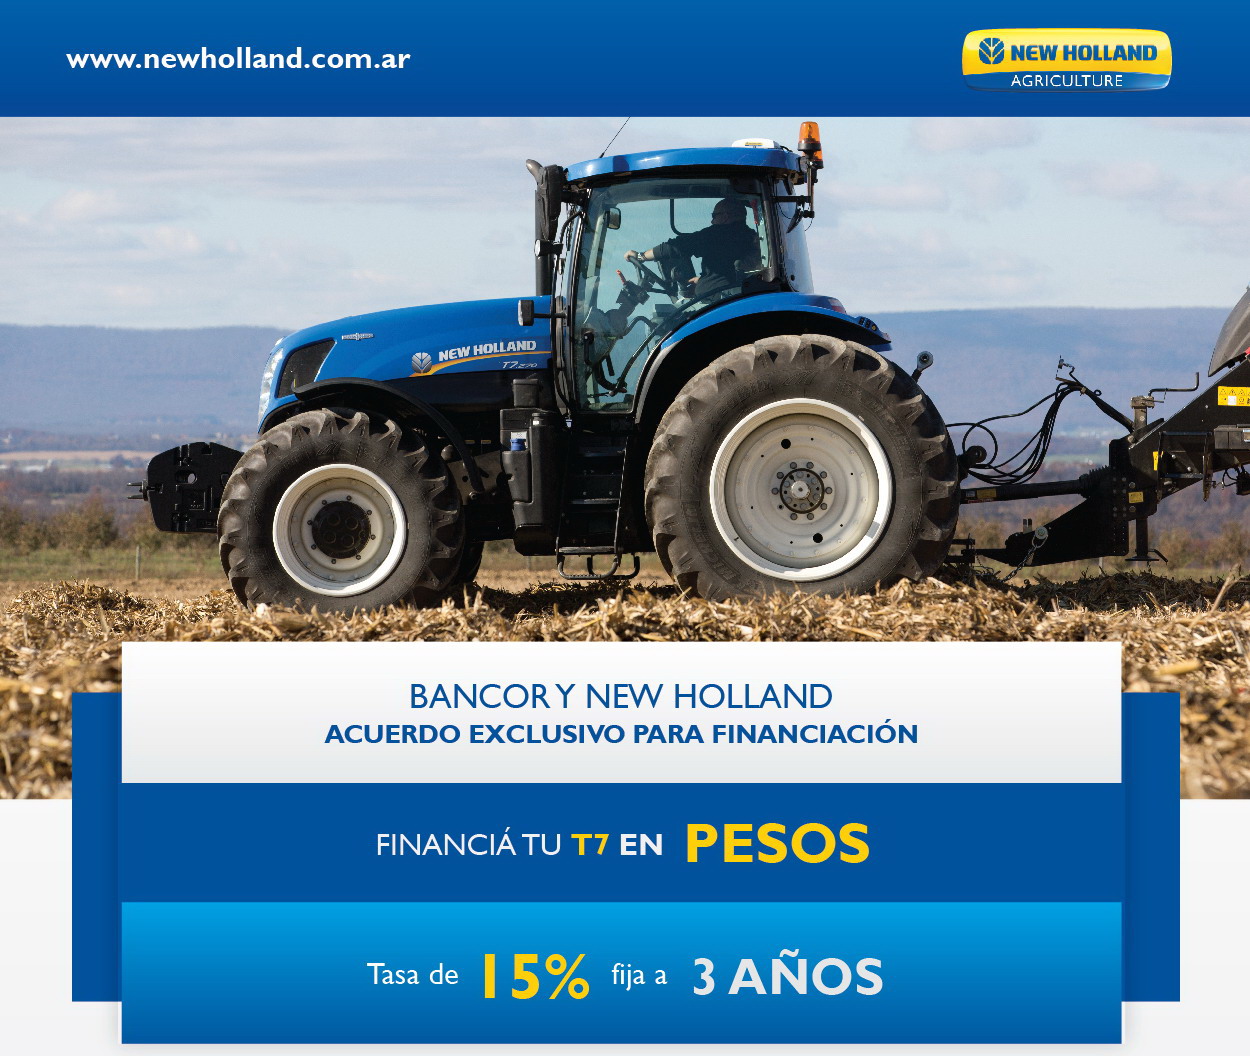 New Holland - 2015-08 Landing - Bancor1